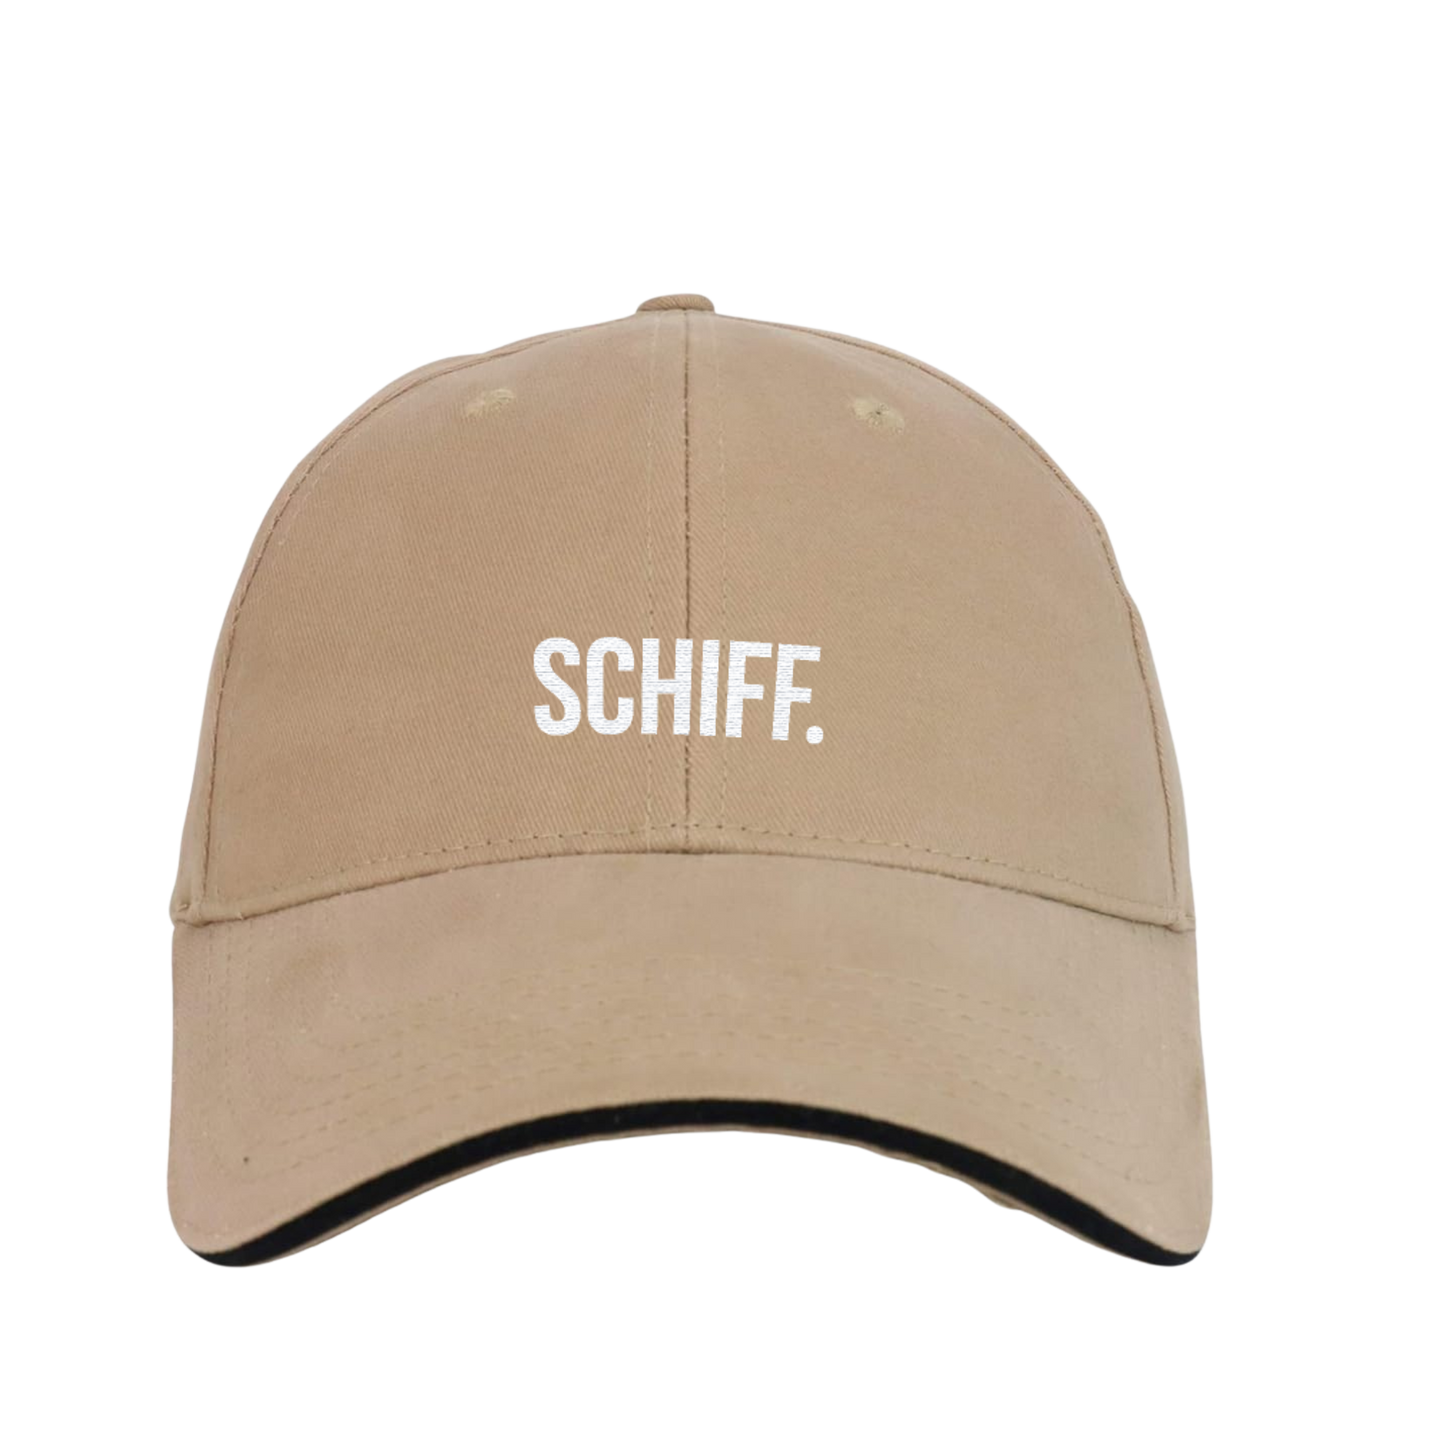 Tan Embroidered Schiff Baseball Cap